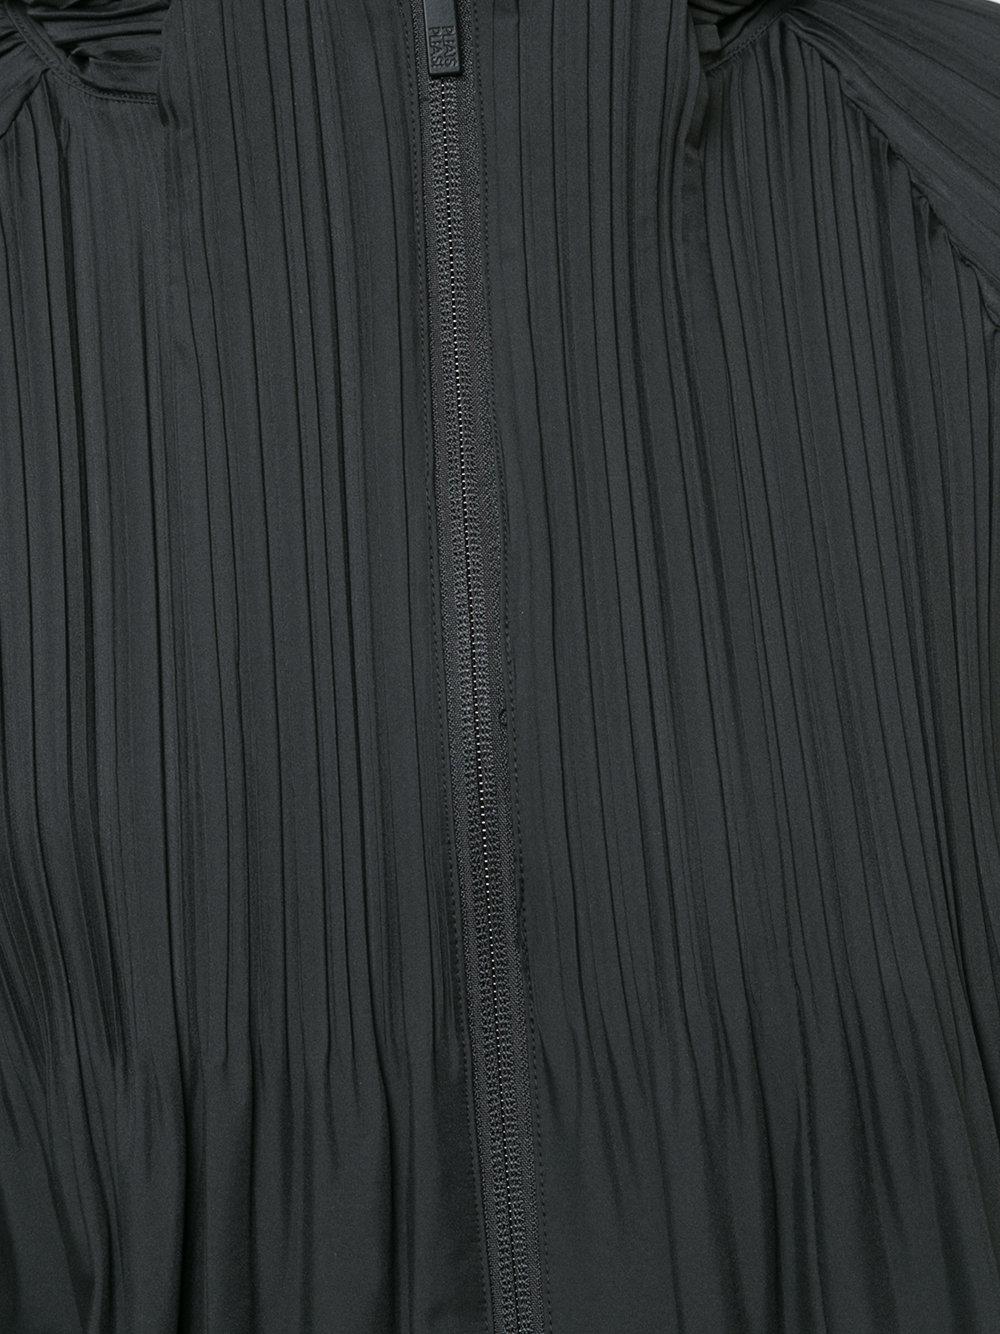 Pleats Please Issey Miyake Synthetic Jaunty Coat in Black | Lyst